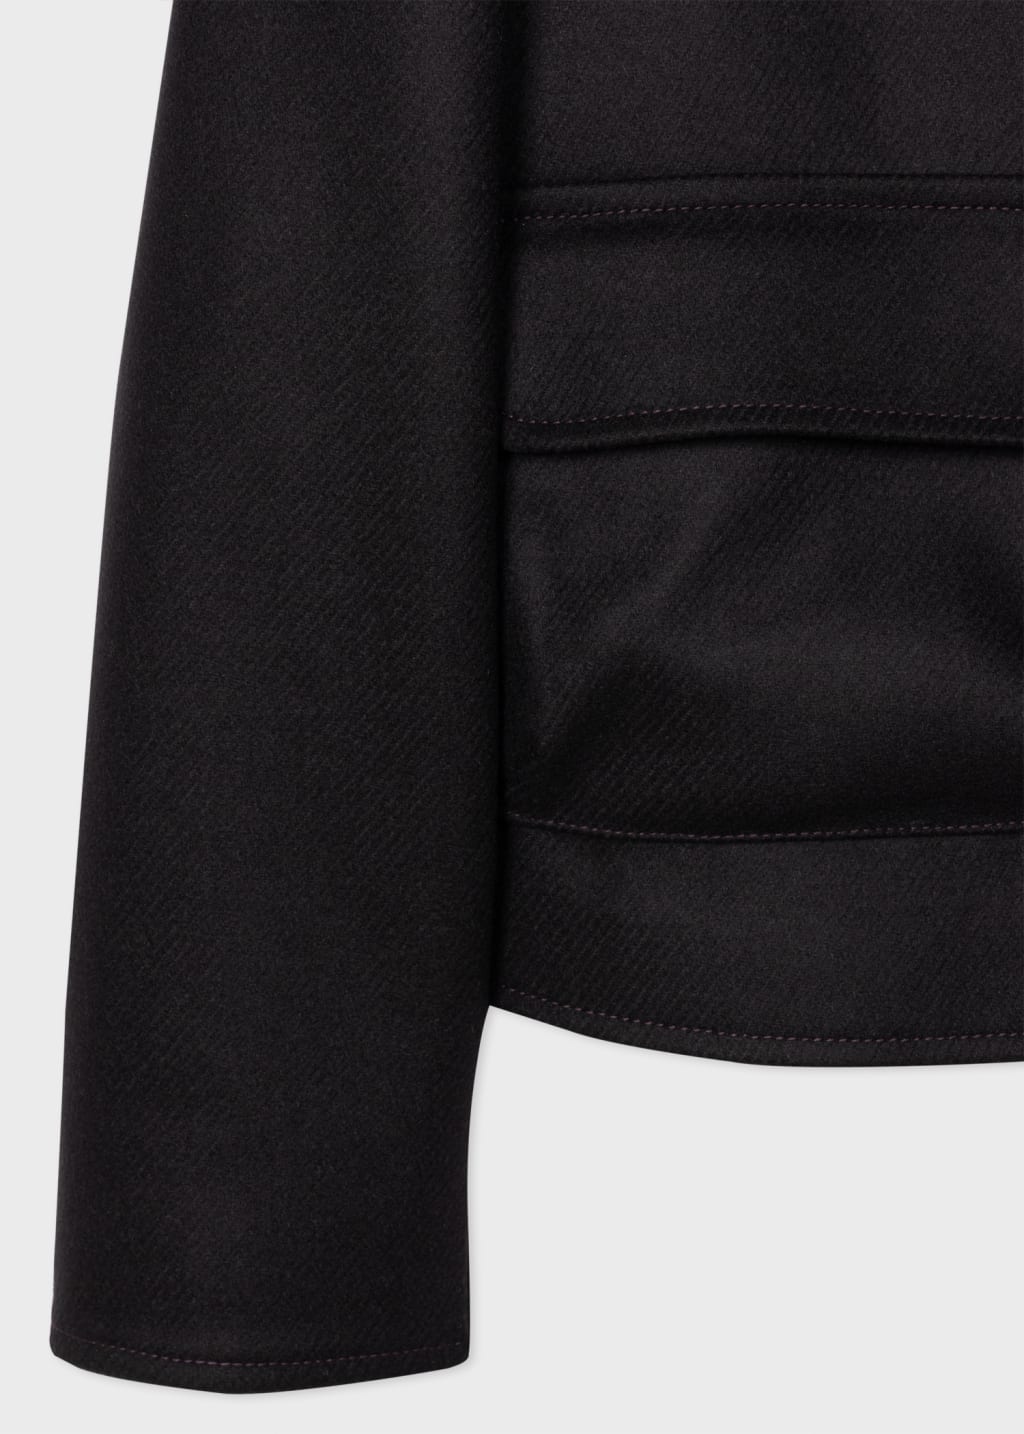 Detail View - Women's Black Wool-Cashmere Cocoon Coat Paul Smith